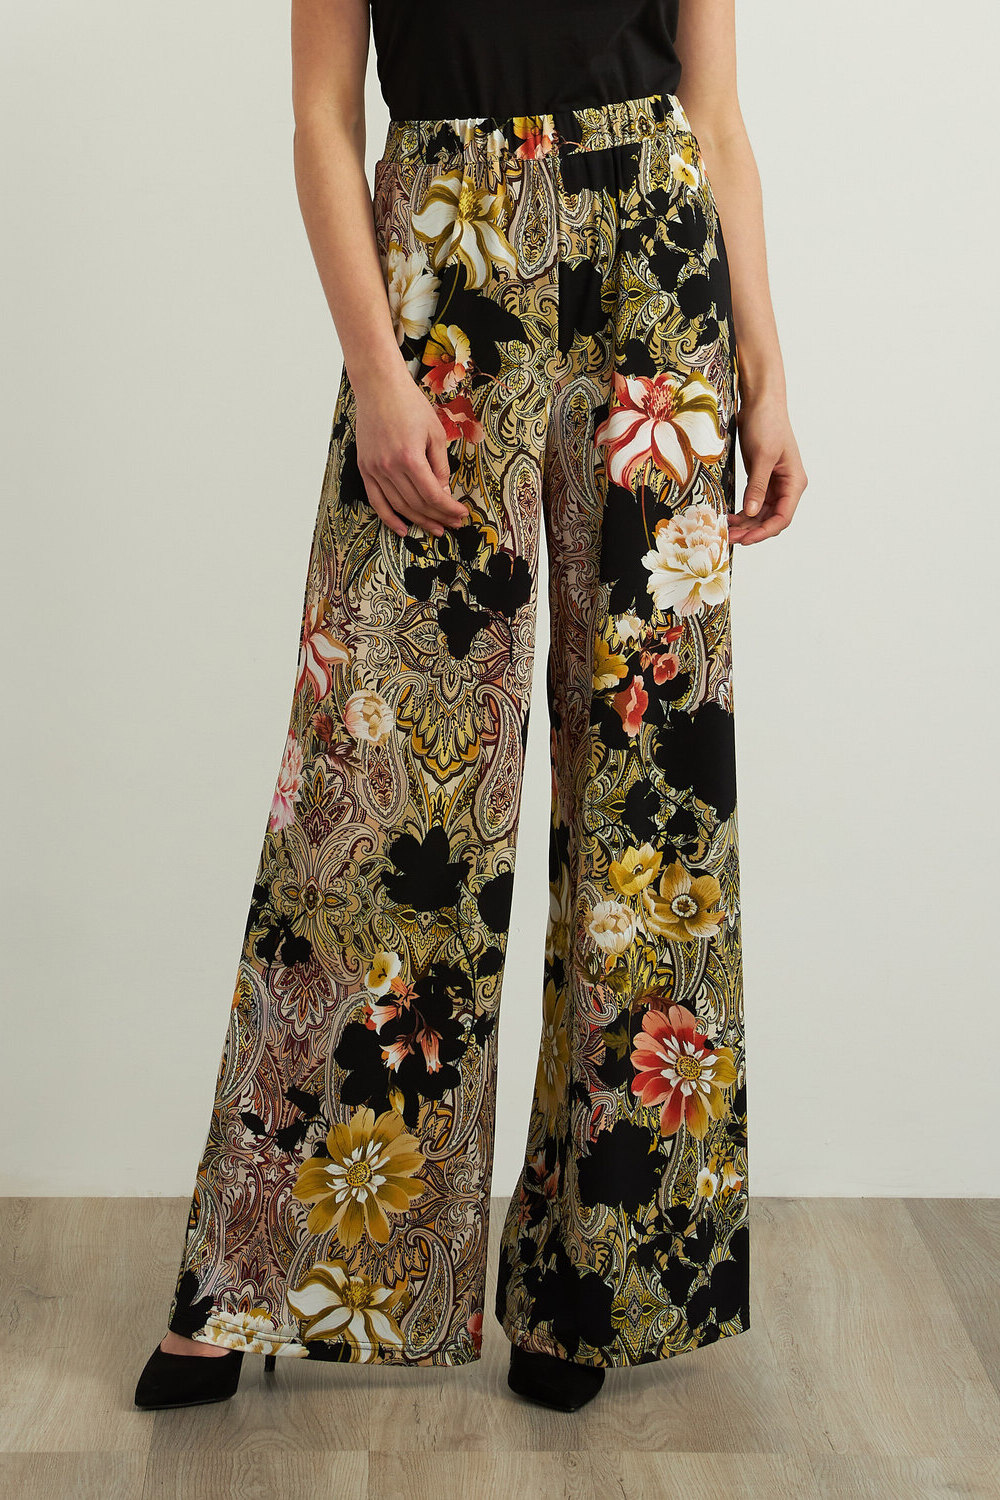 Joseph Ribkoff Paisley Floral Pants Style 213437. Black/multi